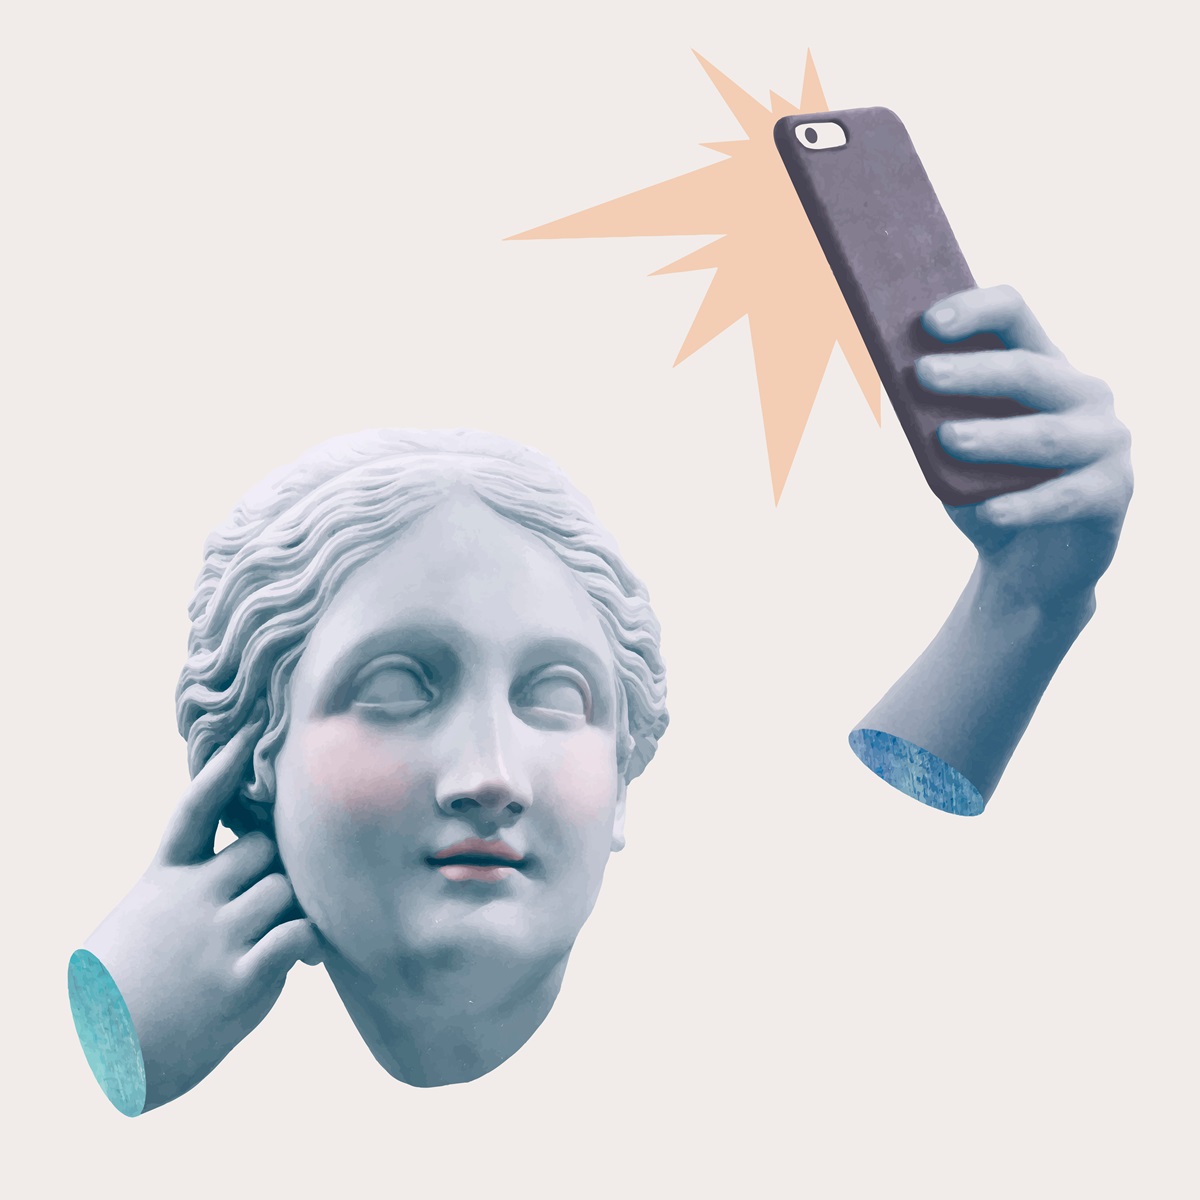 figura escultura girega tomandose una foto selfie